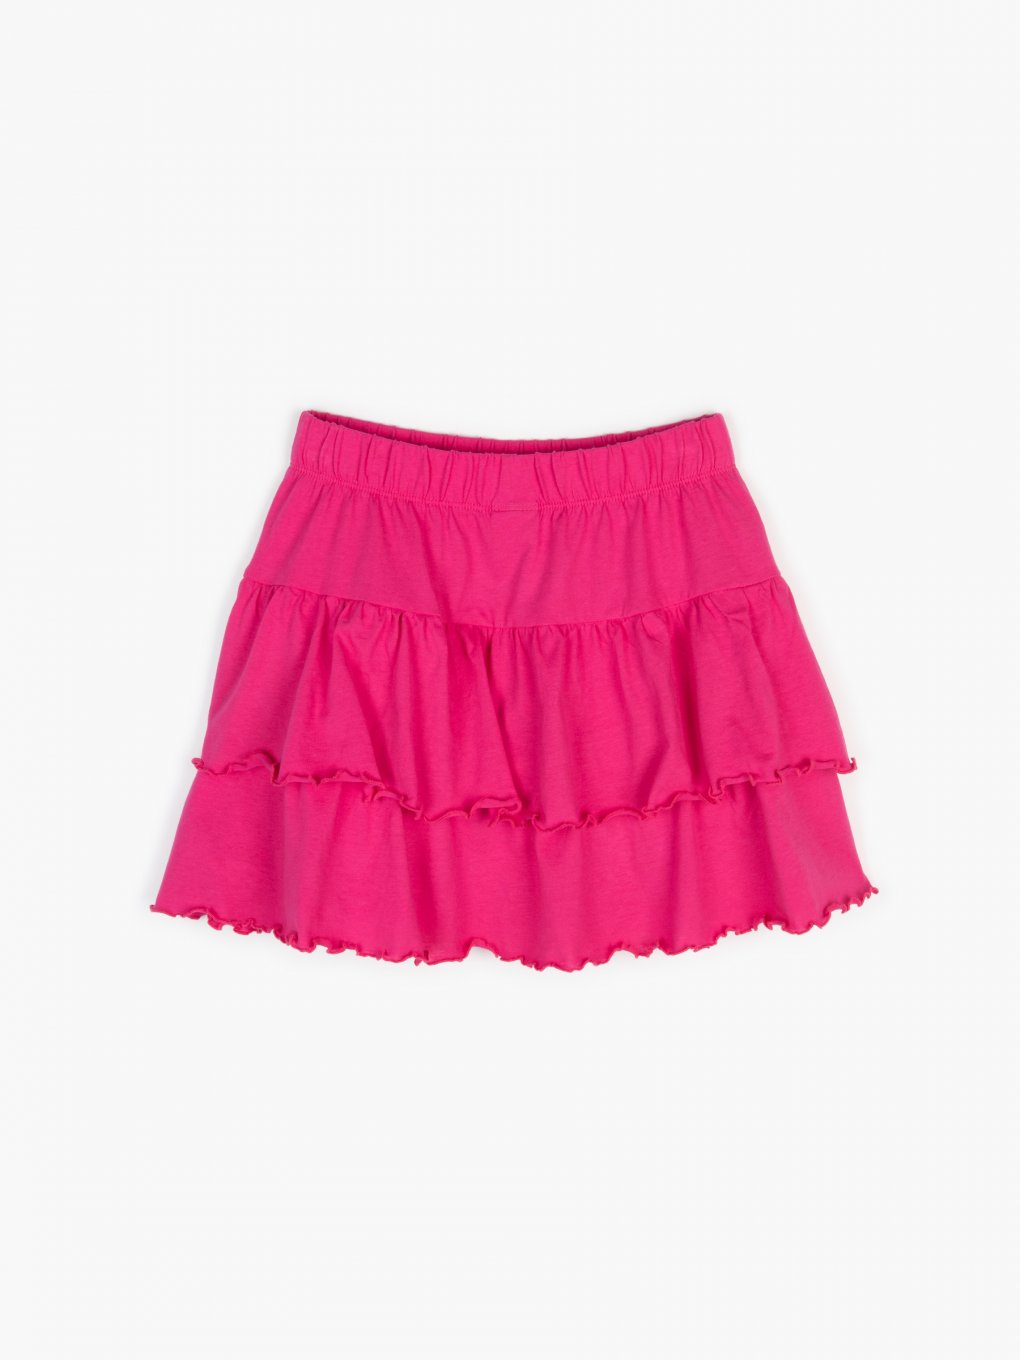 Jersey skirt with ruffles